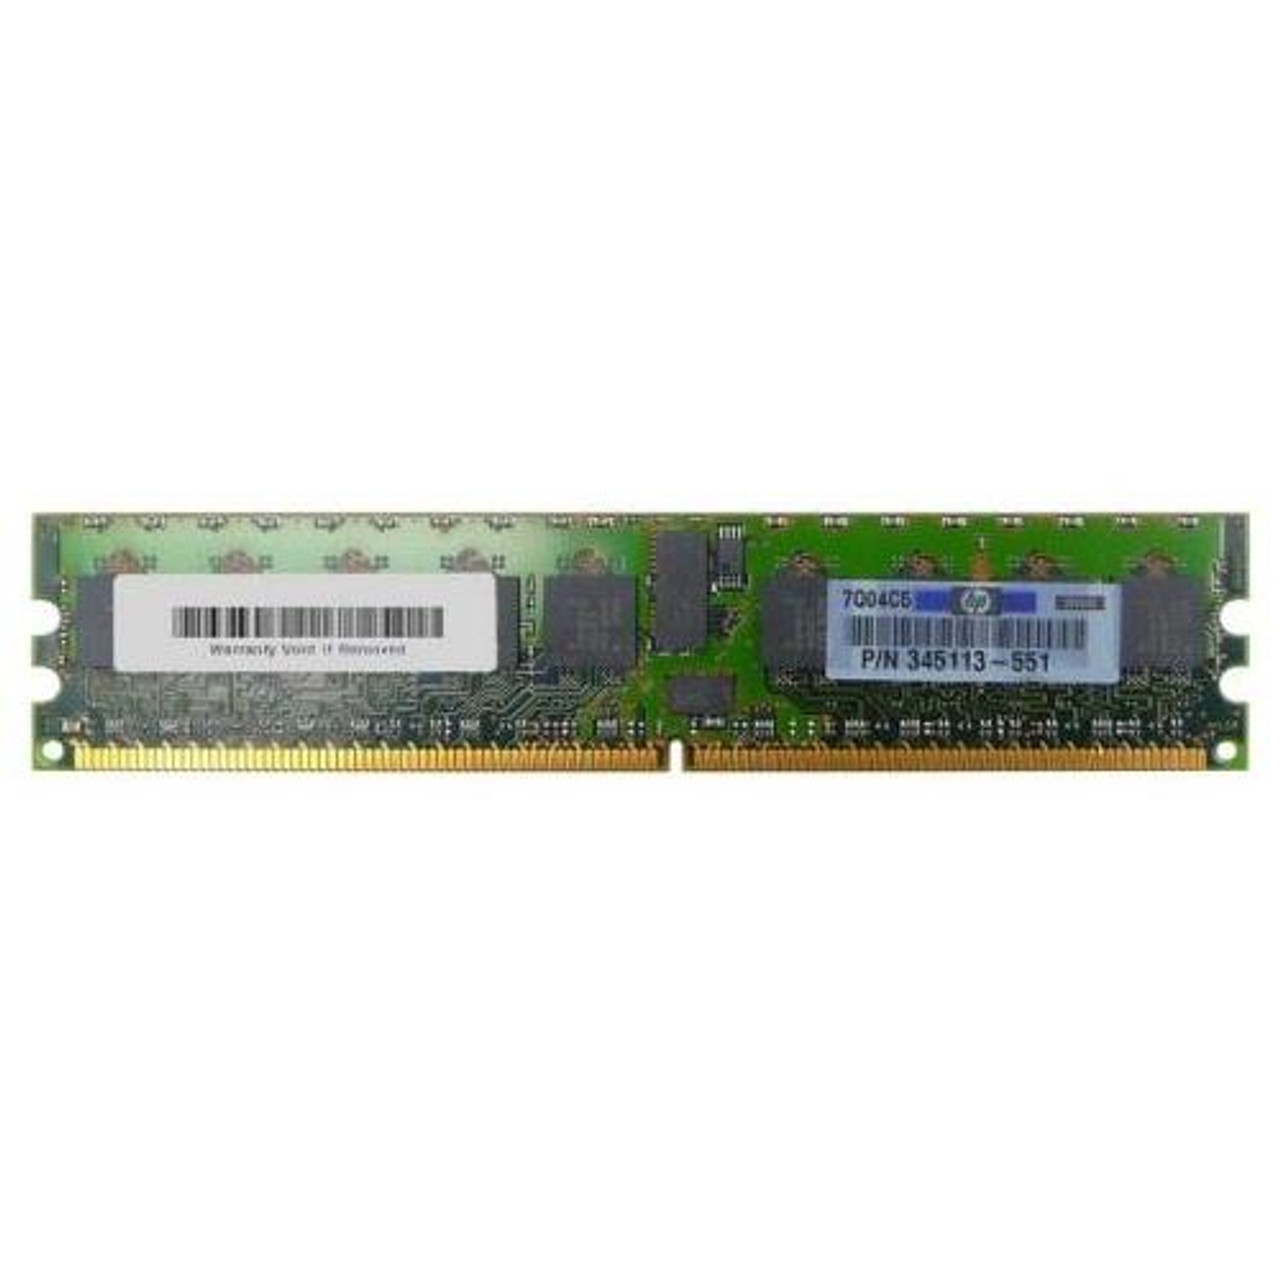 345113-551 HP 1GB DDR2 Registered ECC PC2-3200 400Mhz 1Rx4 Server